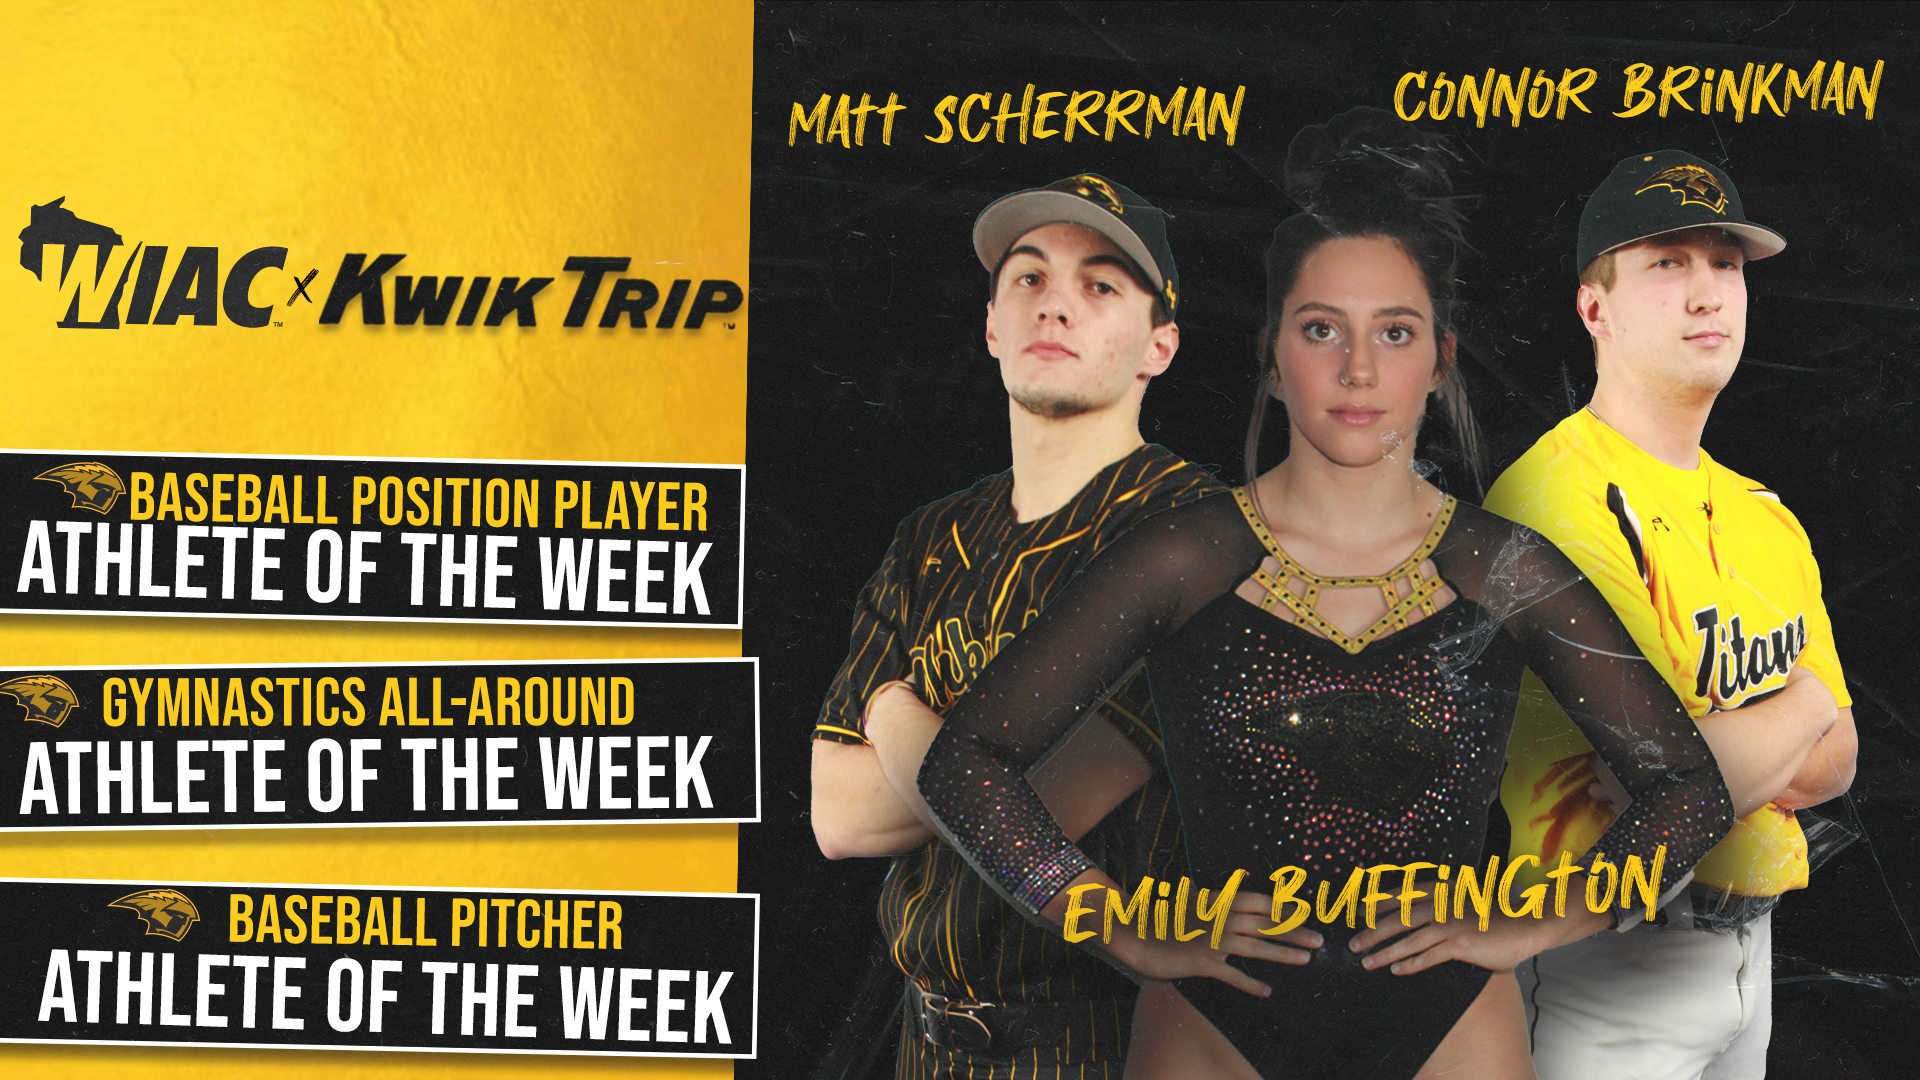 Scherrman, Brinkman and Buffington named WIAC x Kwik Trip Athletes of the Week